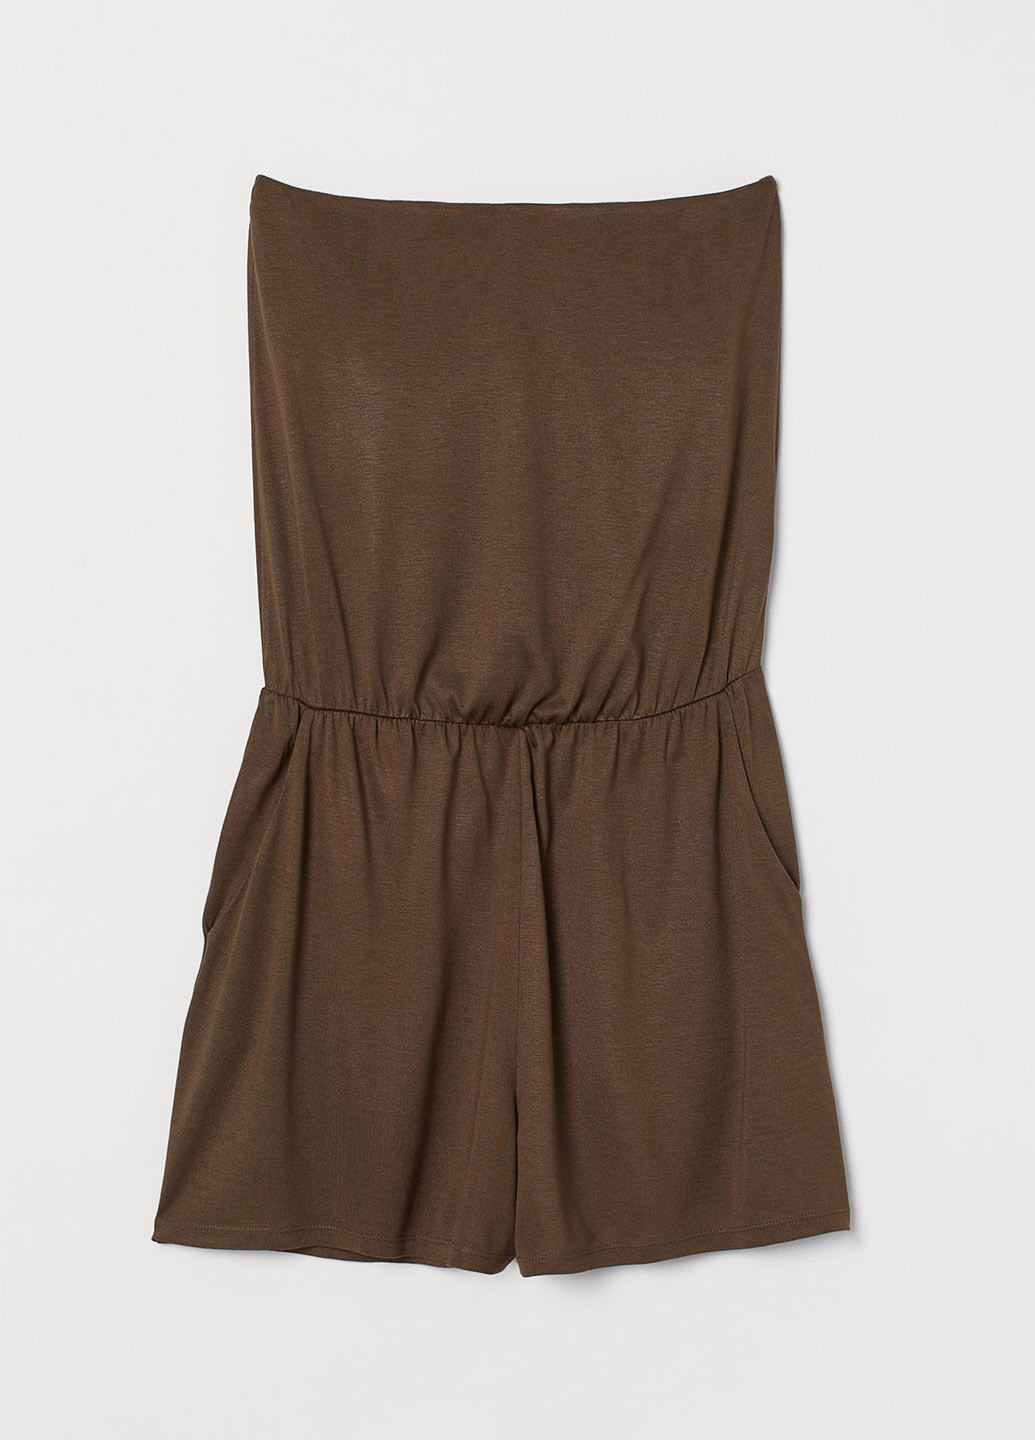 Комбинезон H&M комбинезон-шорты однотонный коричневый кэжуал вискоза, трикотаж